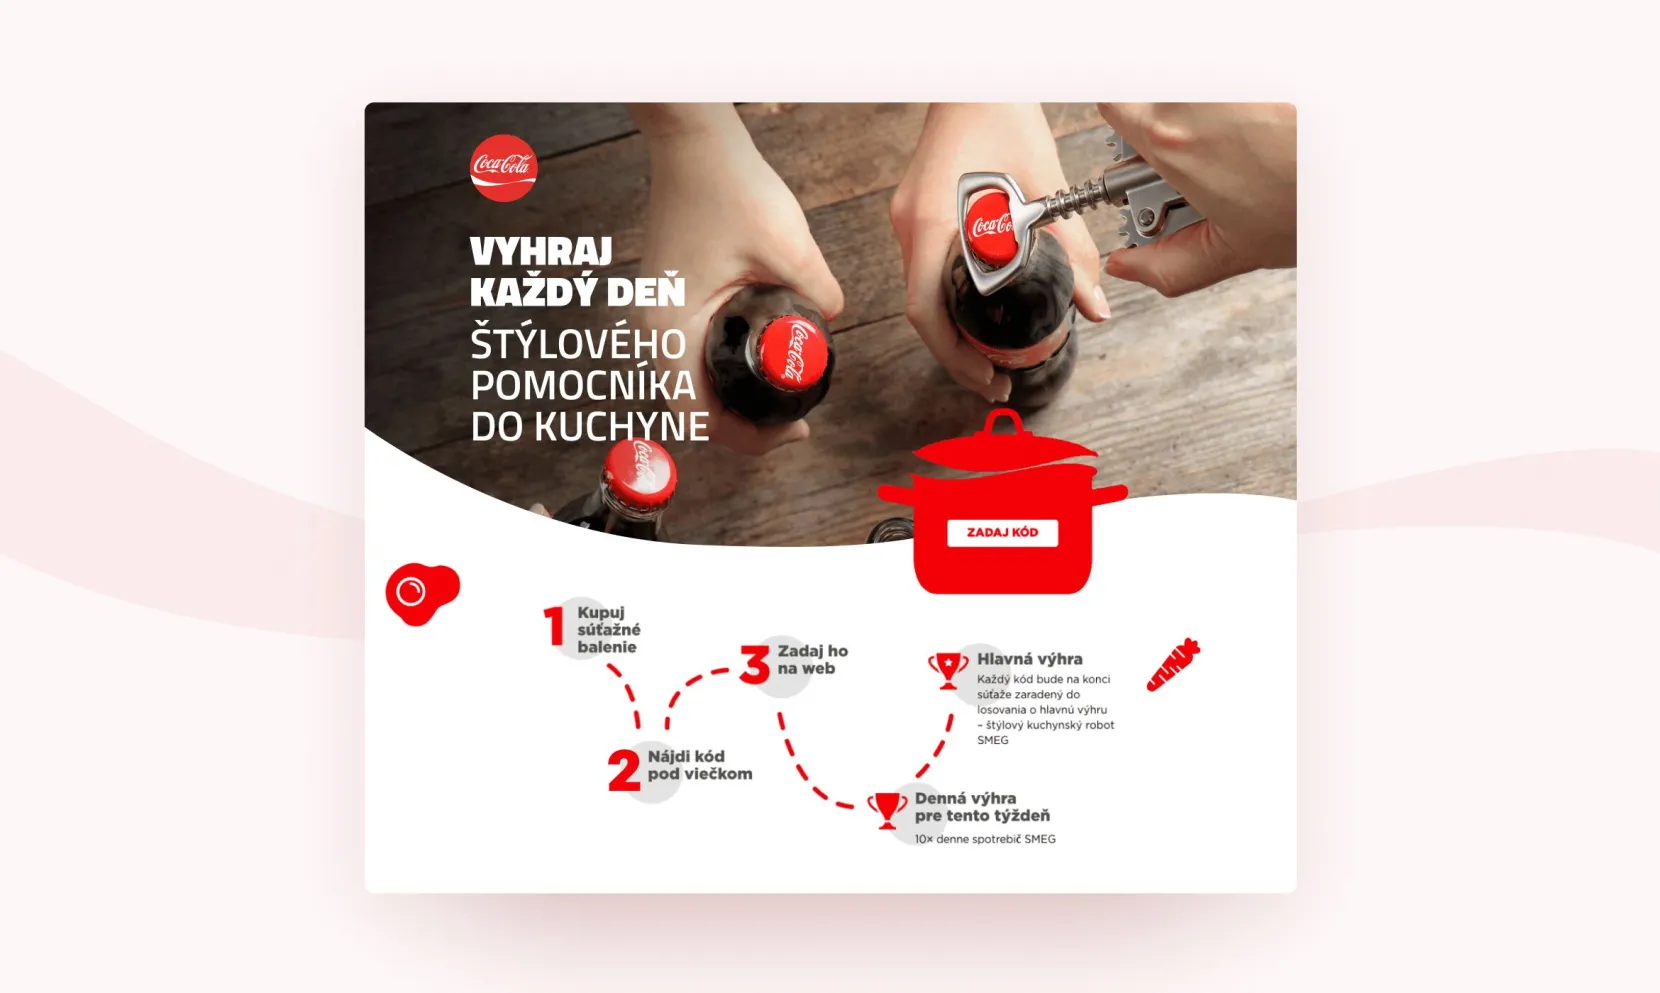 Coca-Cola Web Application